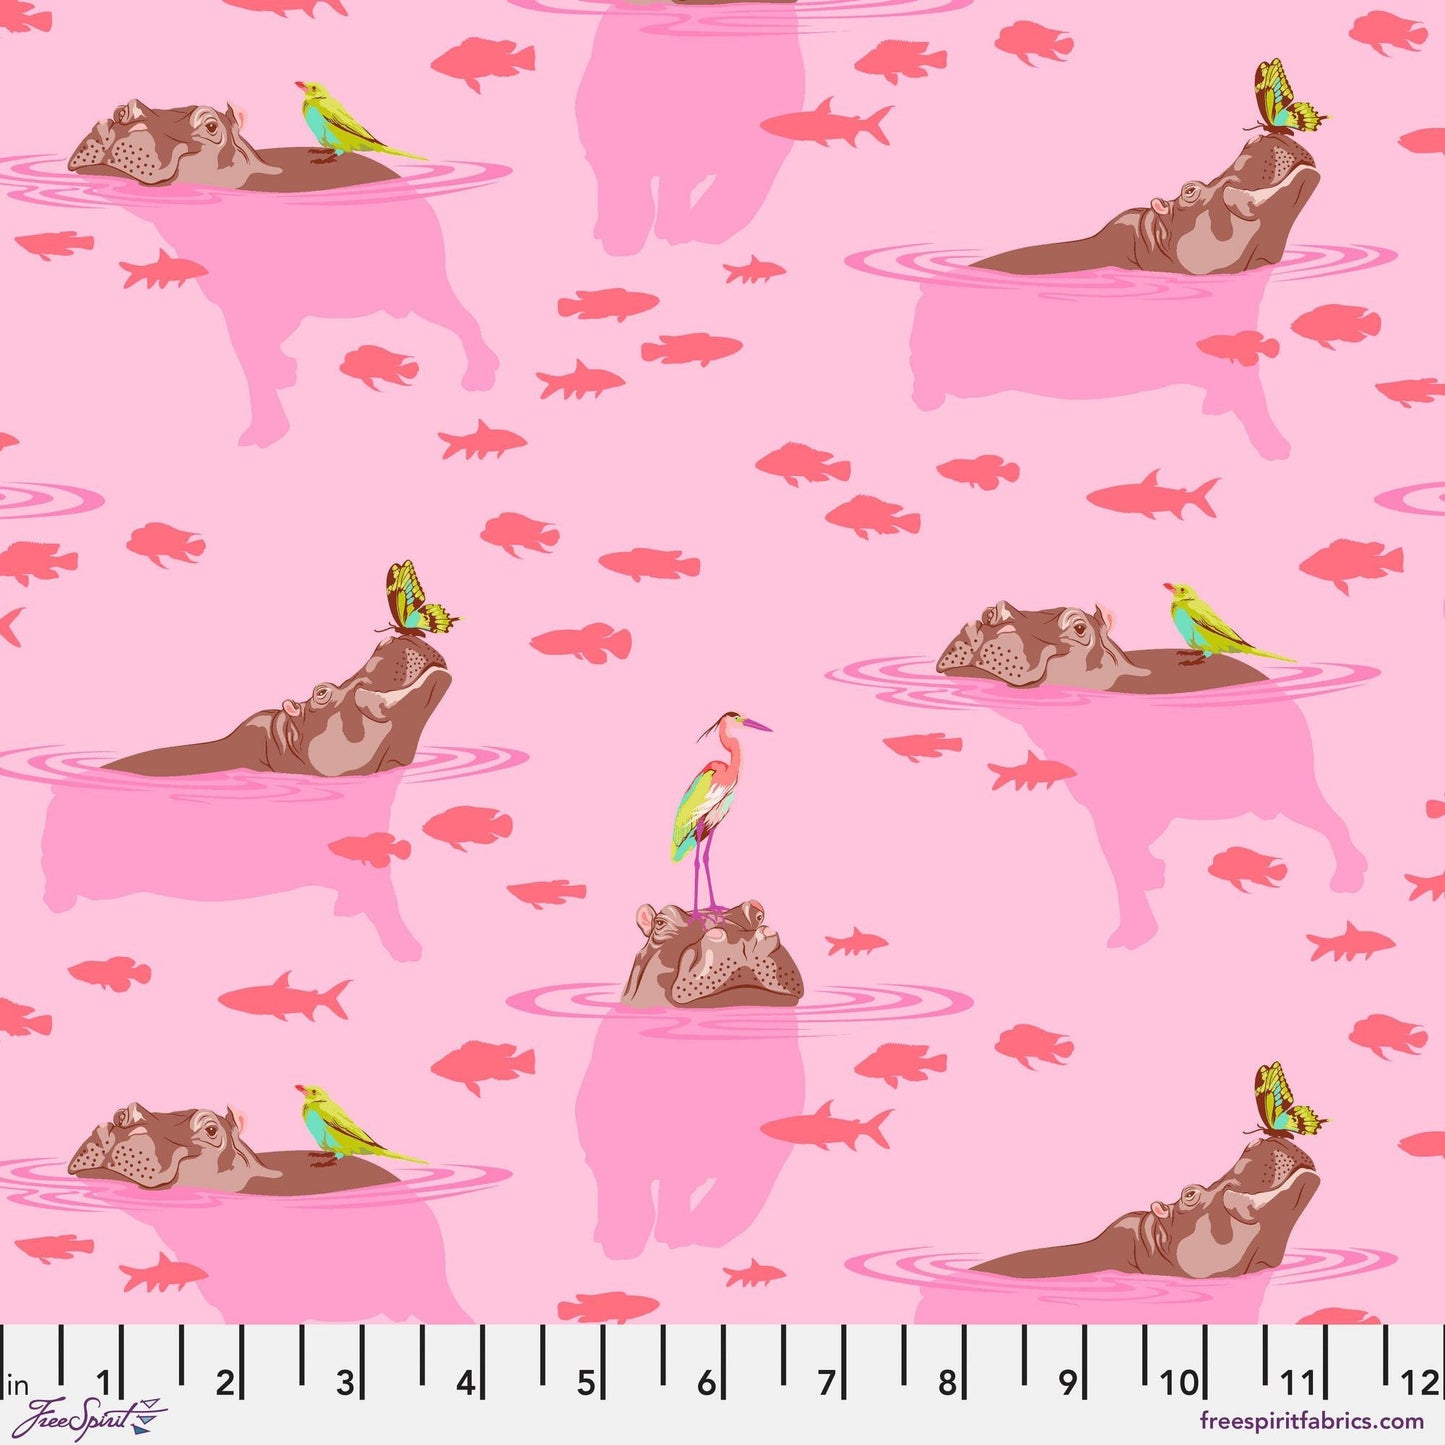 My Hippos Don't Lie Nova Everglow Tula Pink Freespirit Fabrics 100% Quilters Cotton SHIPPING NOW Fabric Fetish